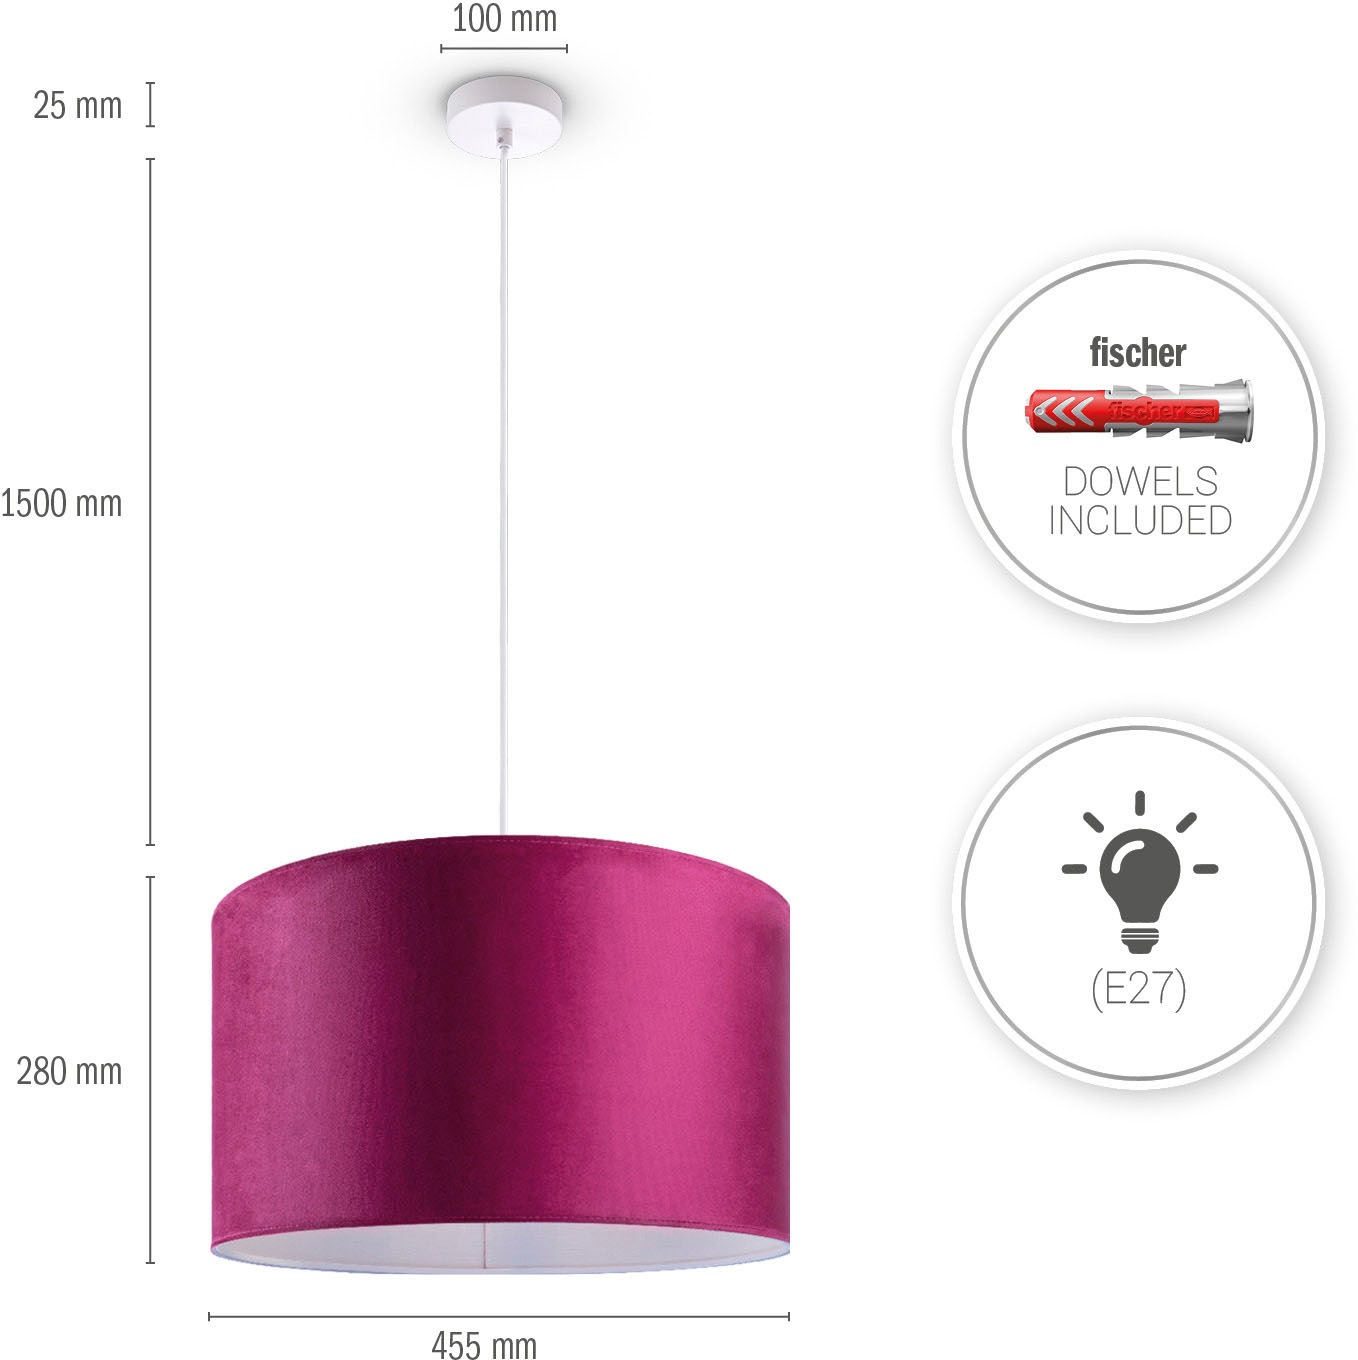 Paco Home Pendelleuchte »Hugo uni Color«, Wohnzimmer Lampenschirm aus Velour Unifarben Deko E27 Kabel 1,5m